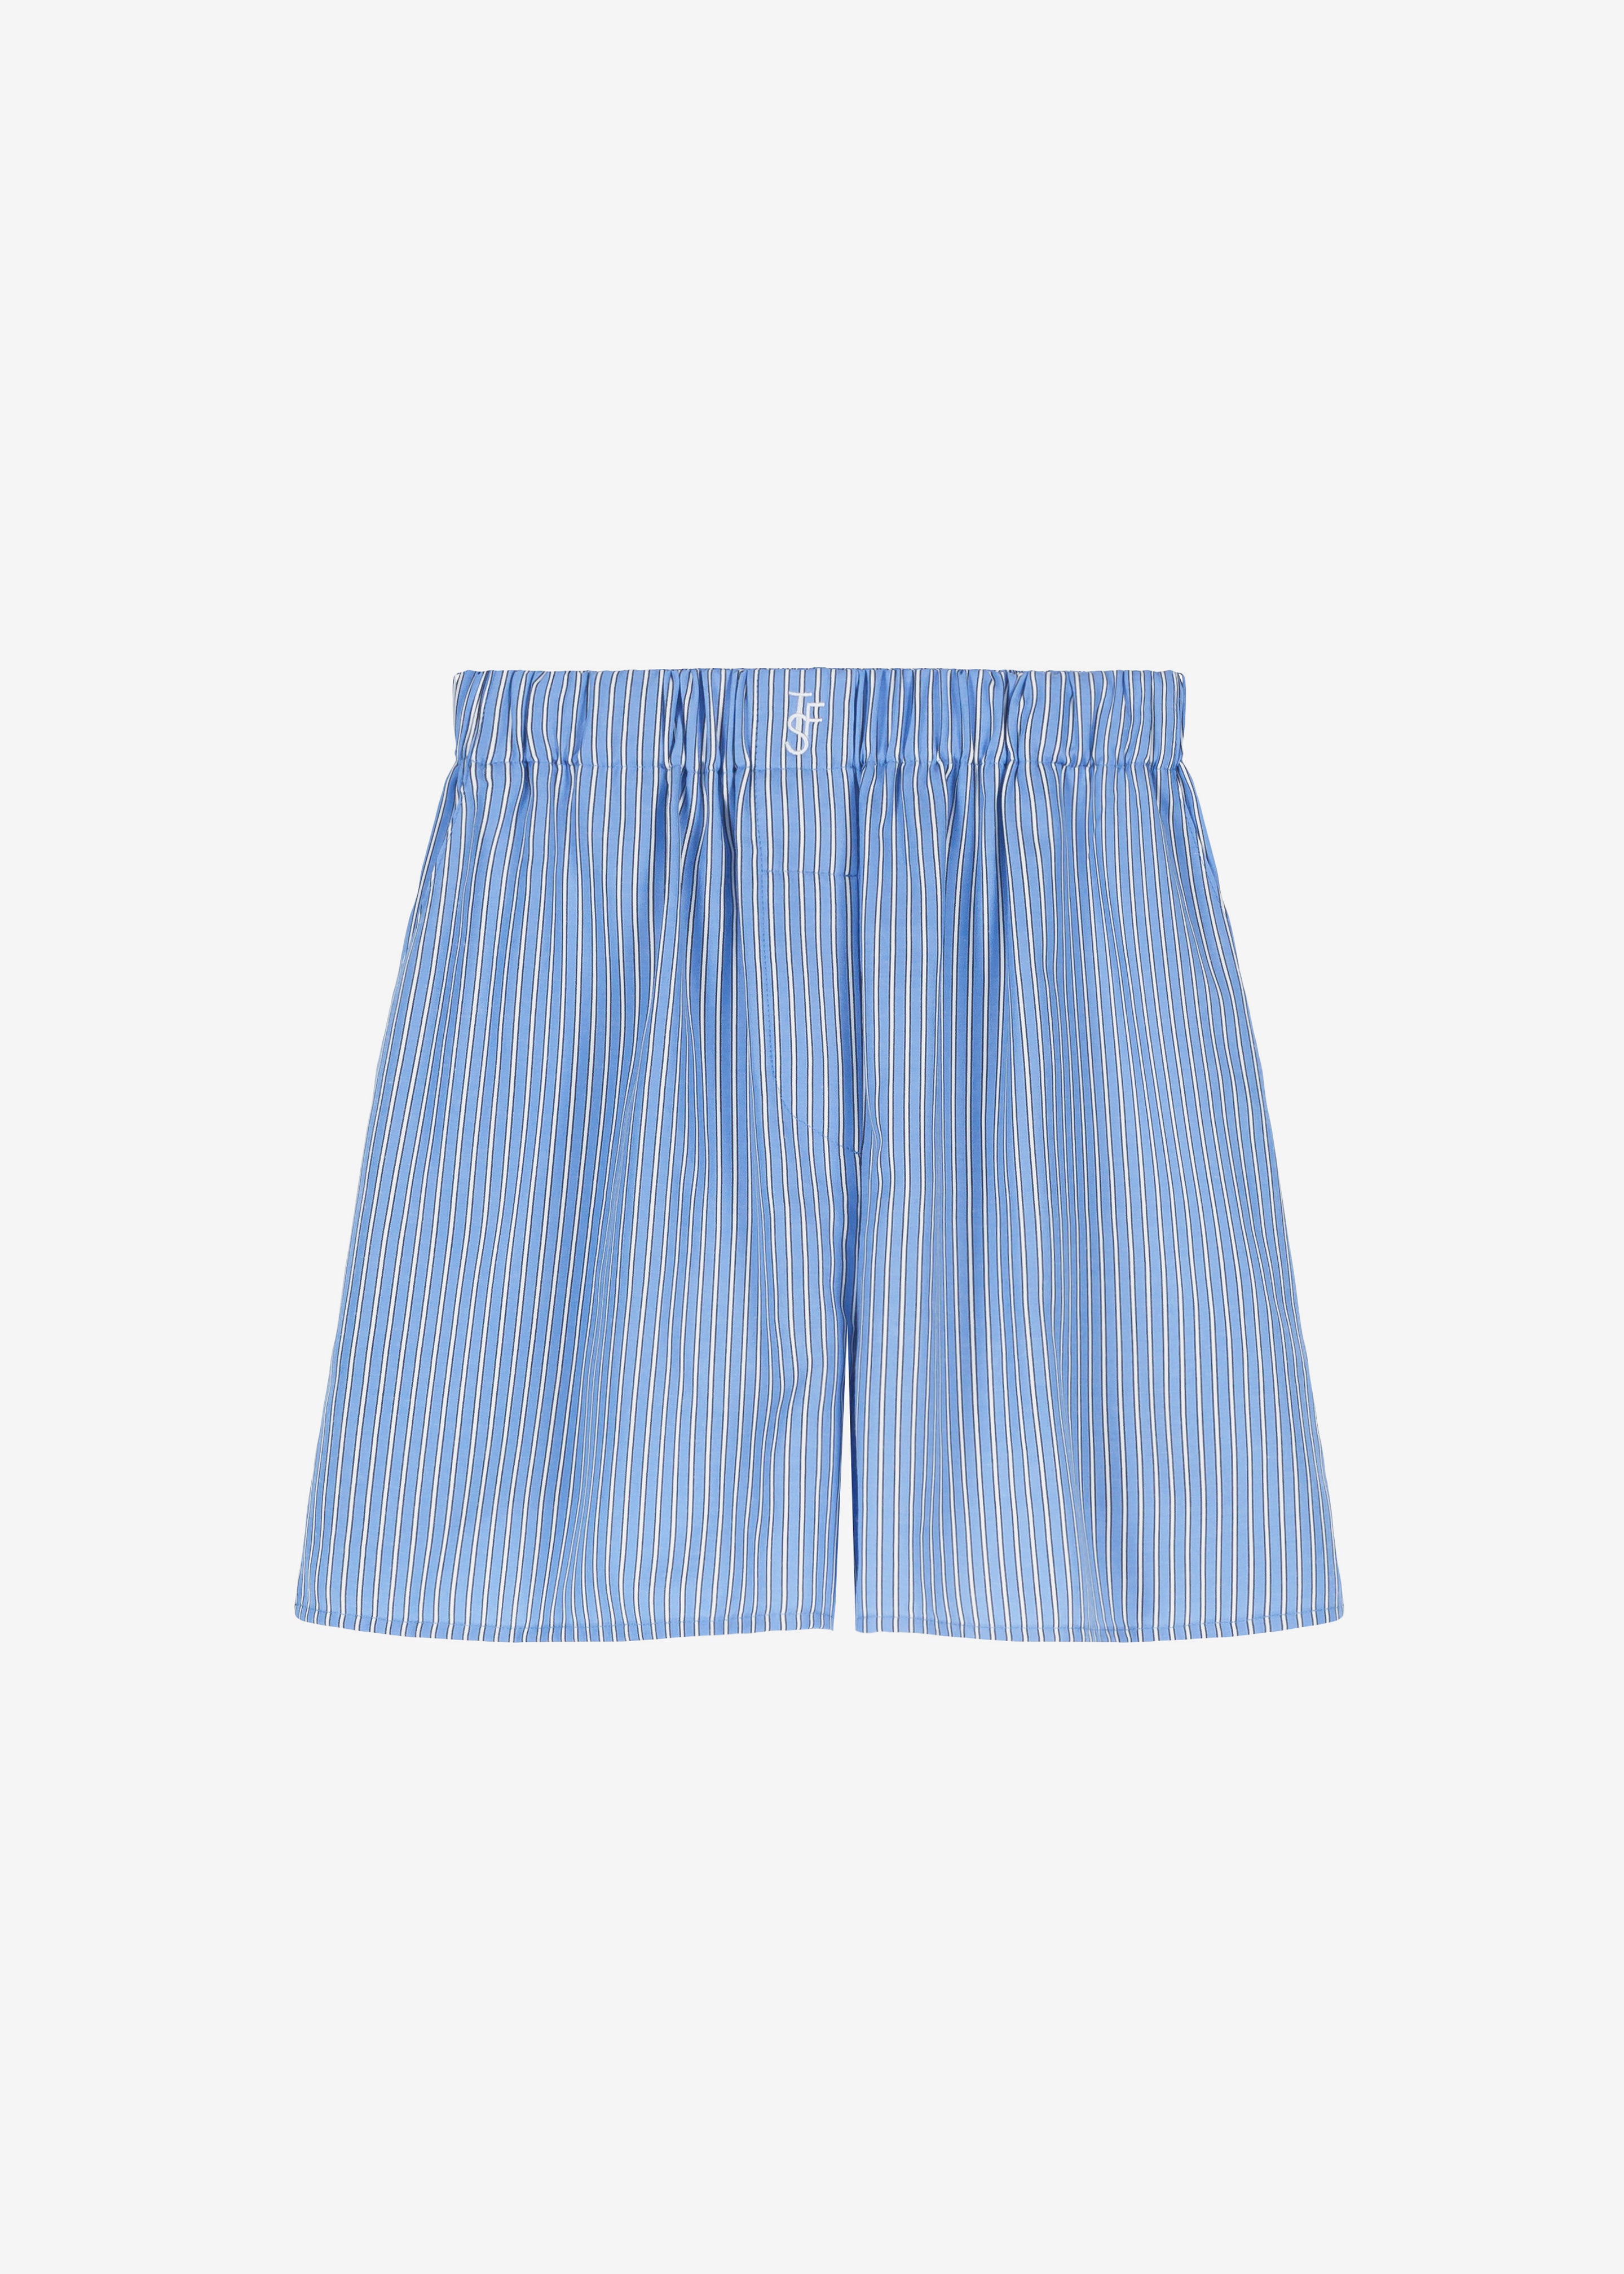 Lui Oxford Boxer Shorts - Light Blue/Black Stripe - 6